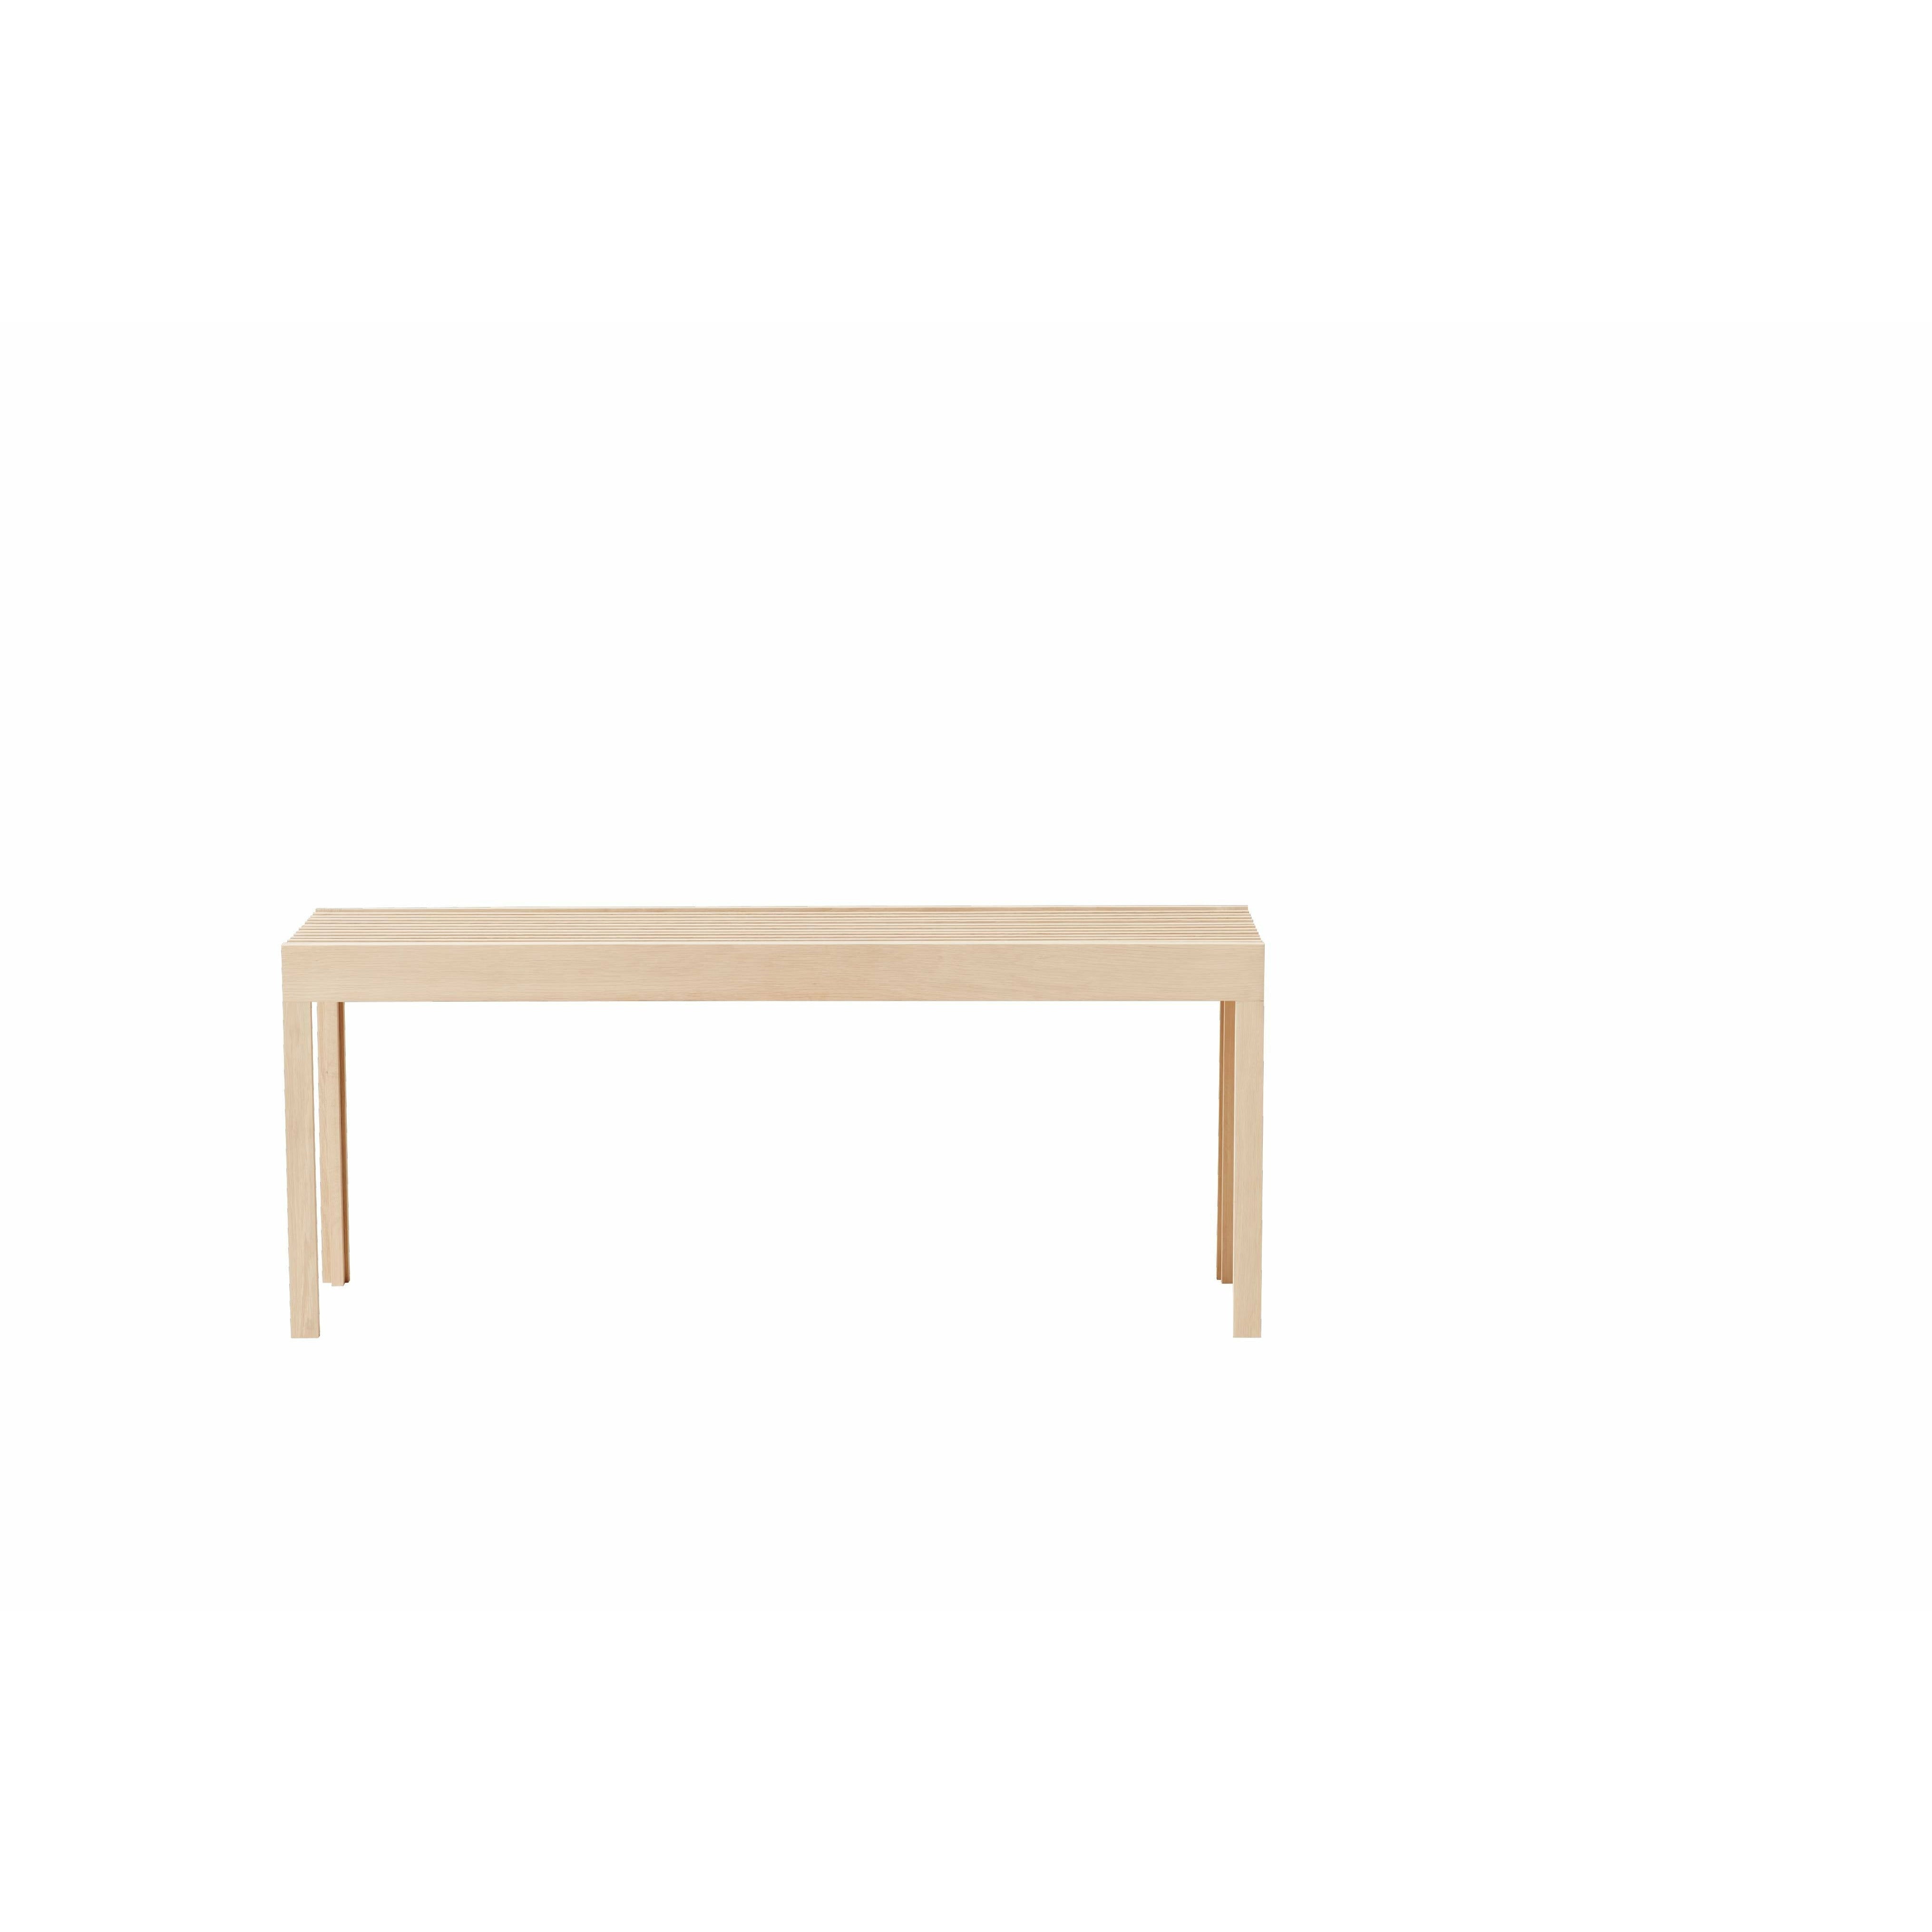 Form & Refine Lehká lavička. Bílý dub